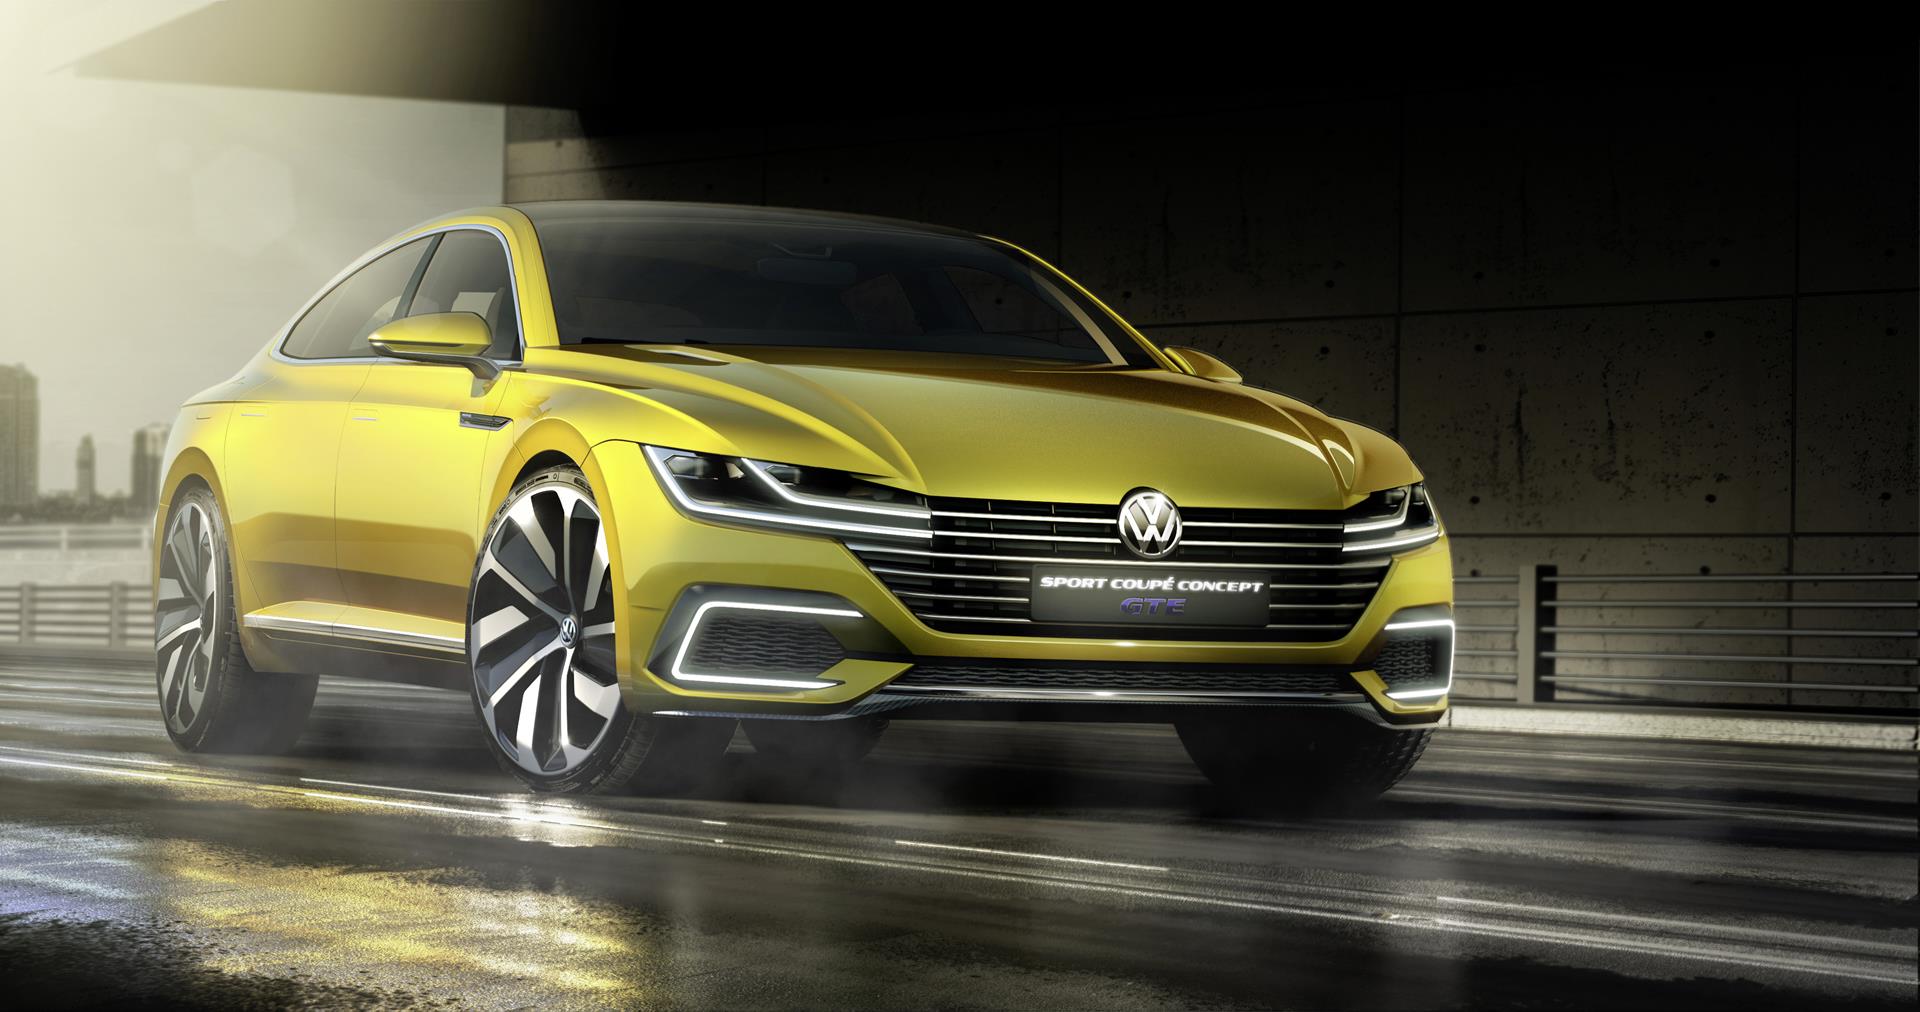 Volkswagen Sport Coupe Concept GTE Backgrounds on Wallpapers Vista